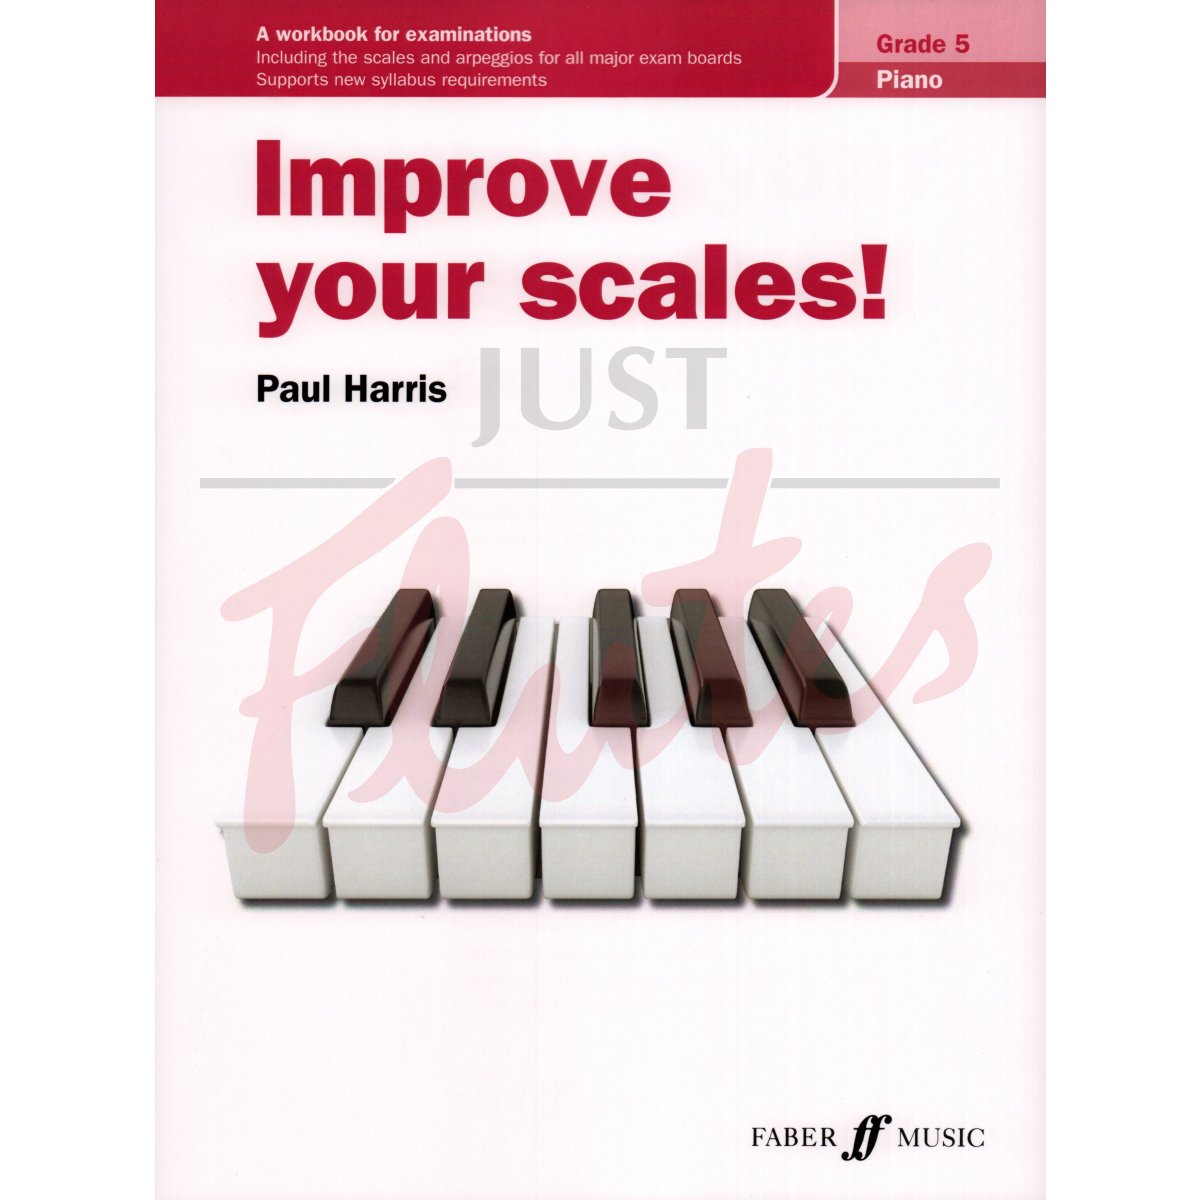 Improve Your Scales! [Piano] Grade 5